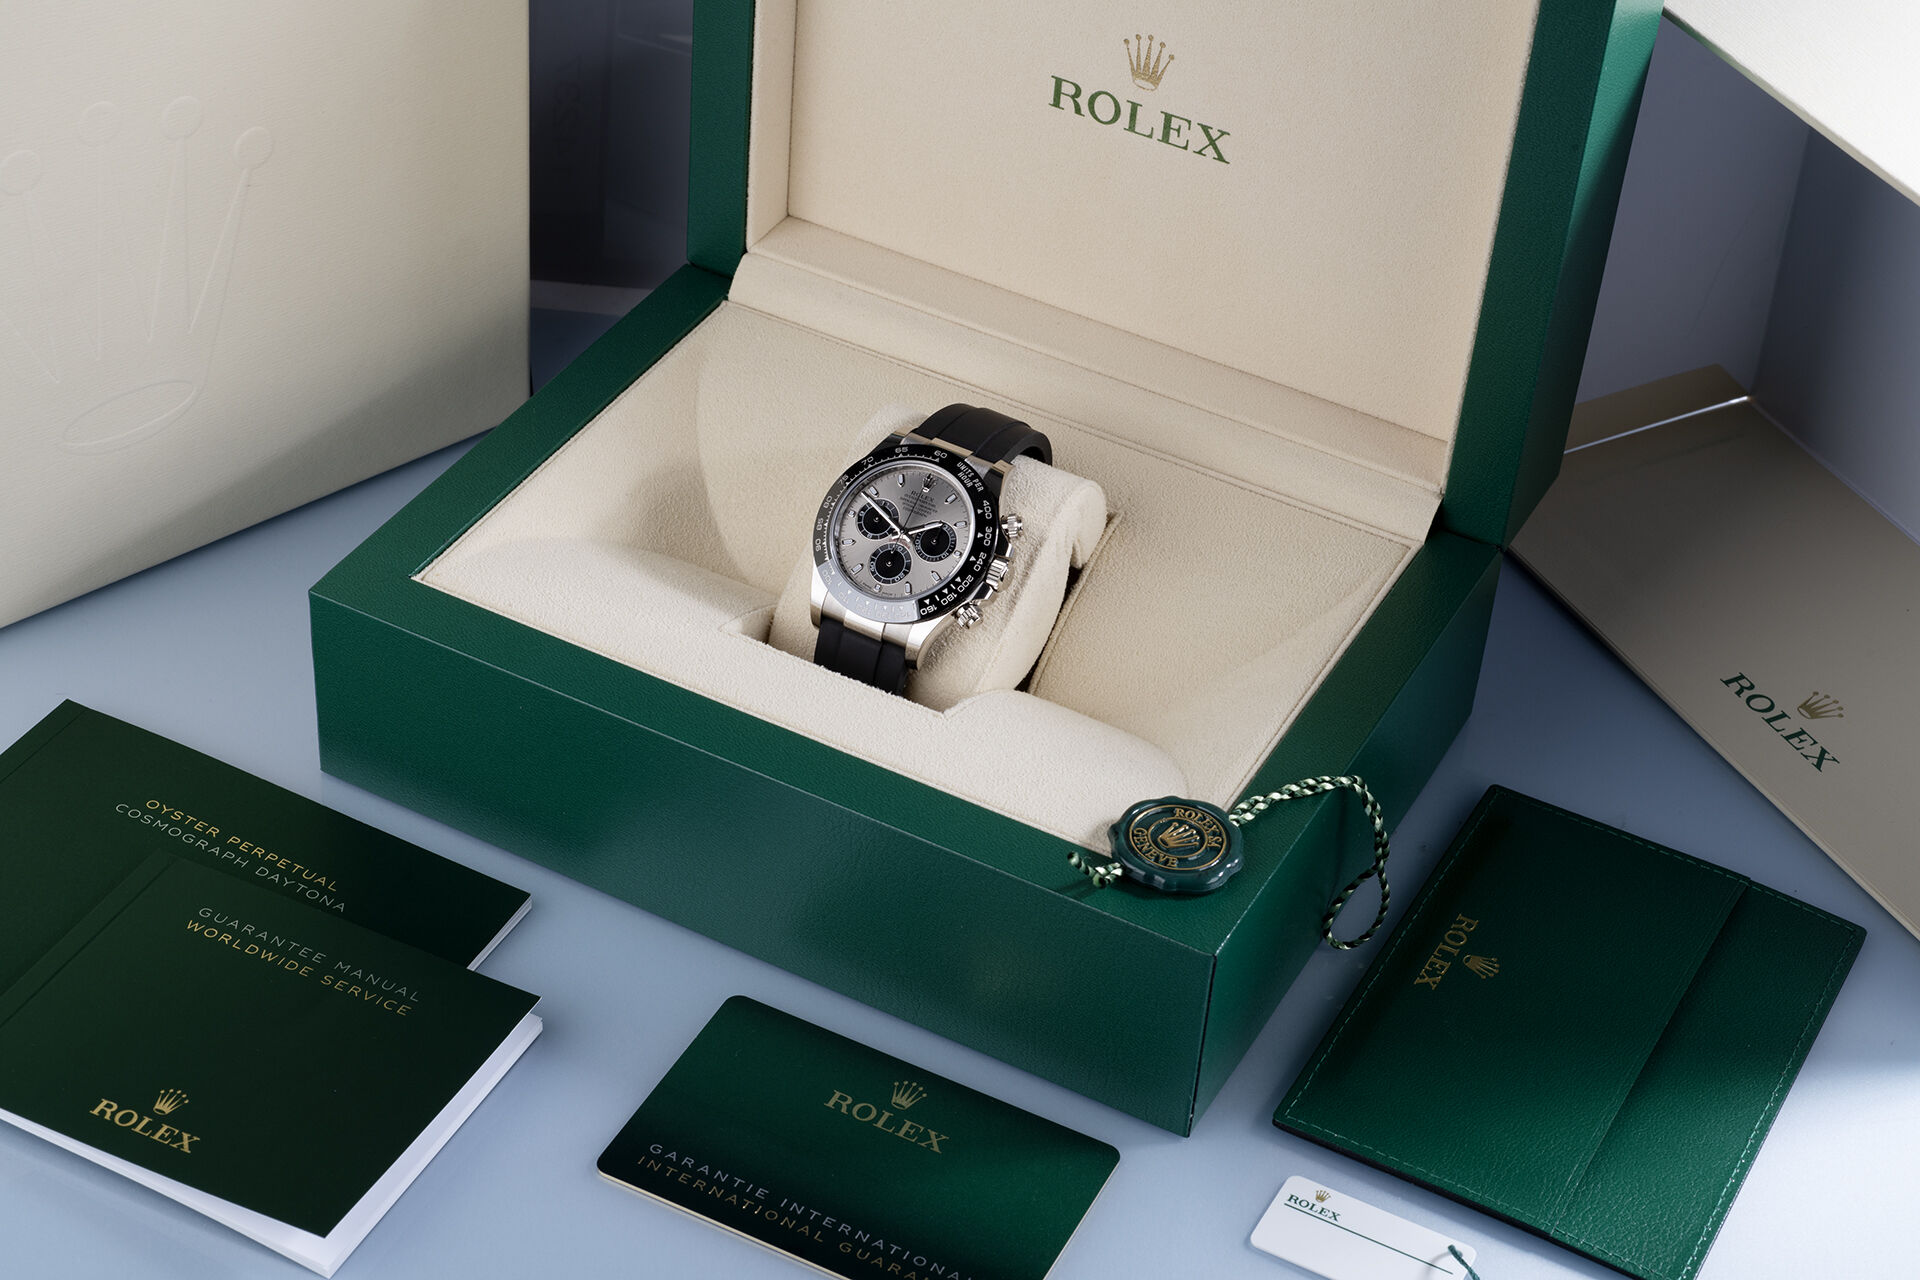 ref 116519LN | Box & Certificate  | Rolex Cosmograph Daytona